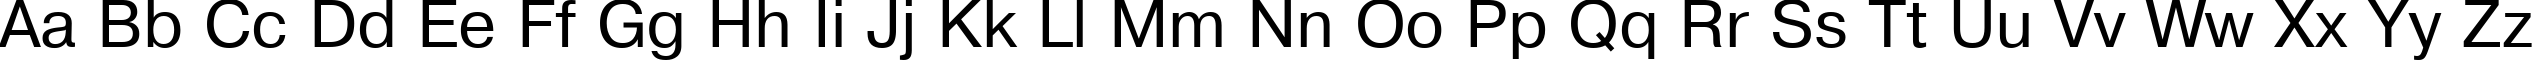 Пример написания английского алфавита шрифтом PragmaticaTT